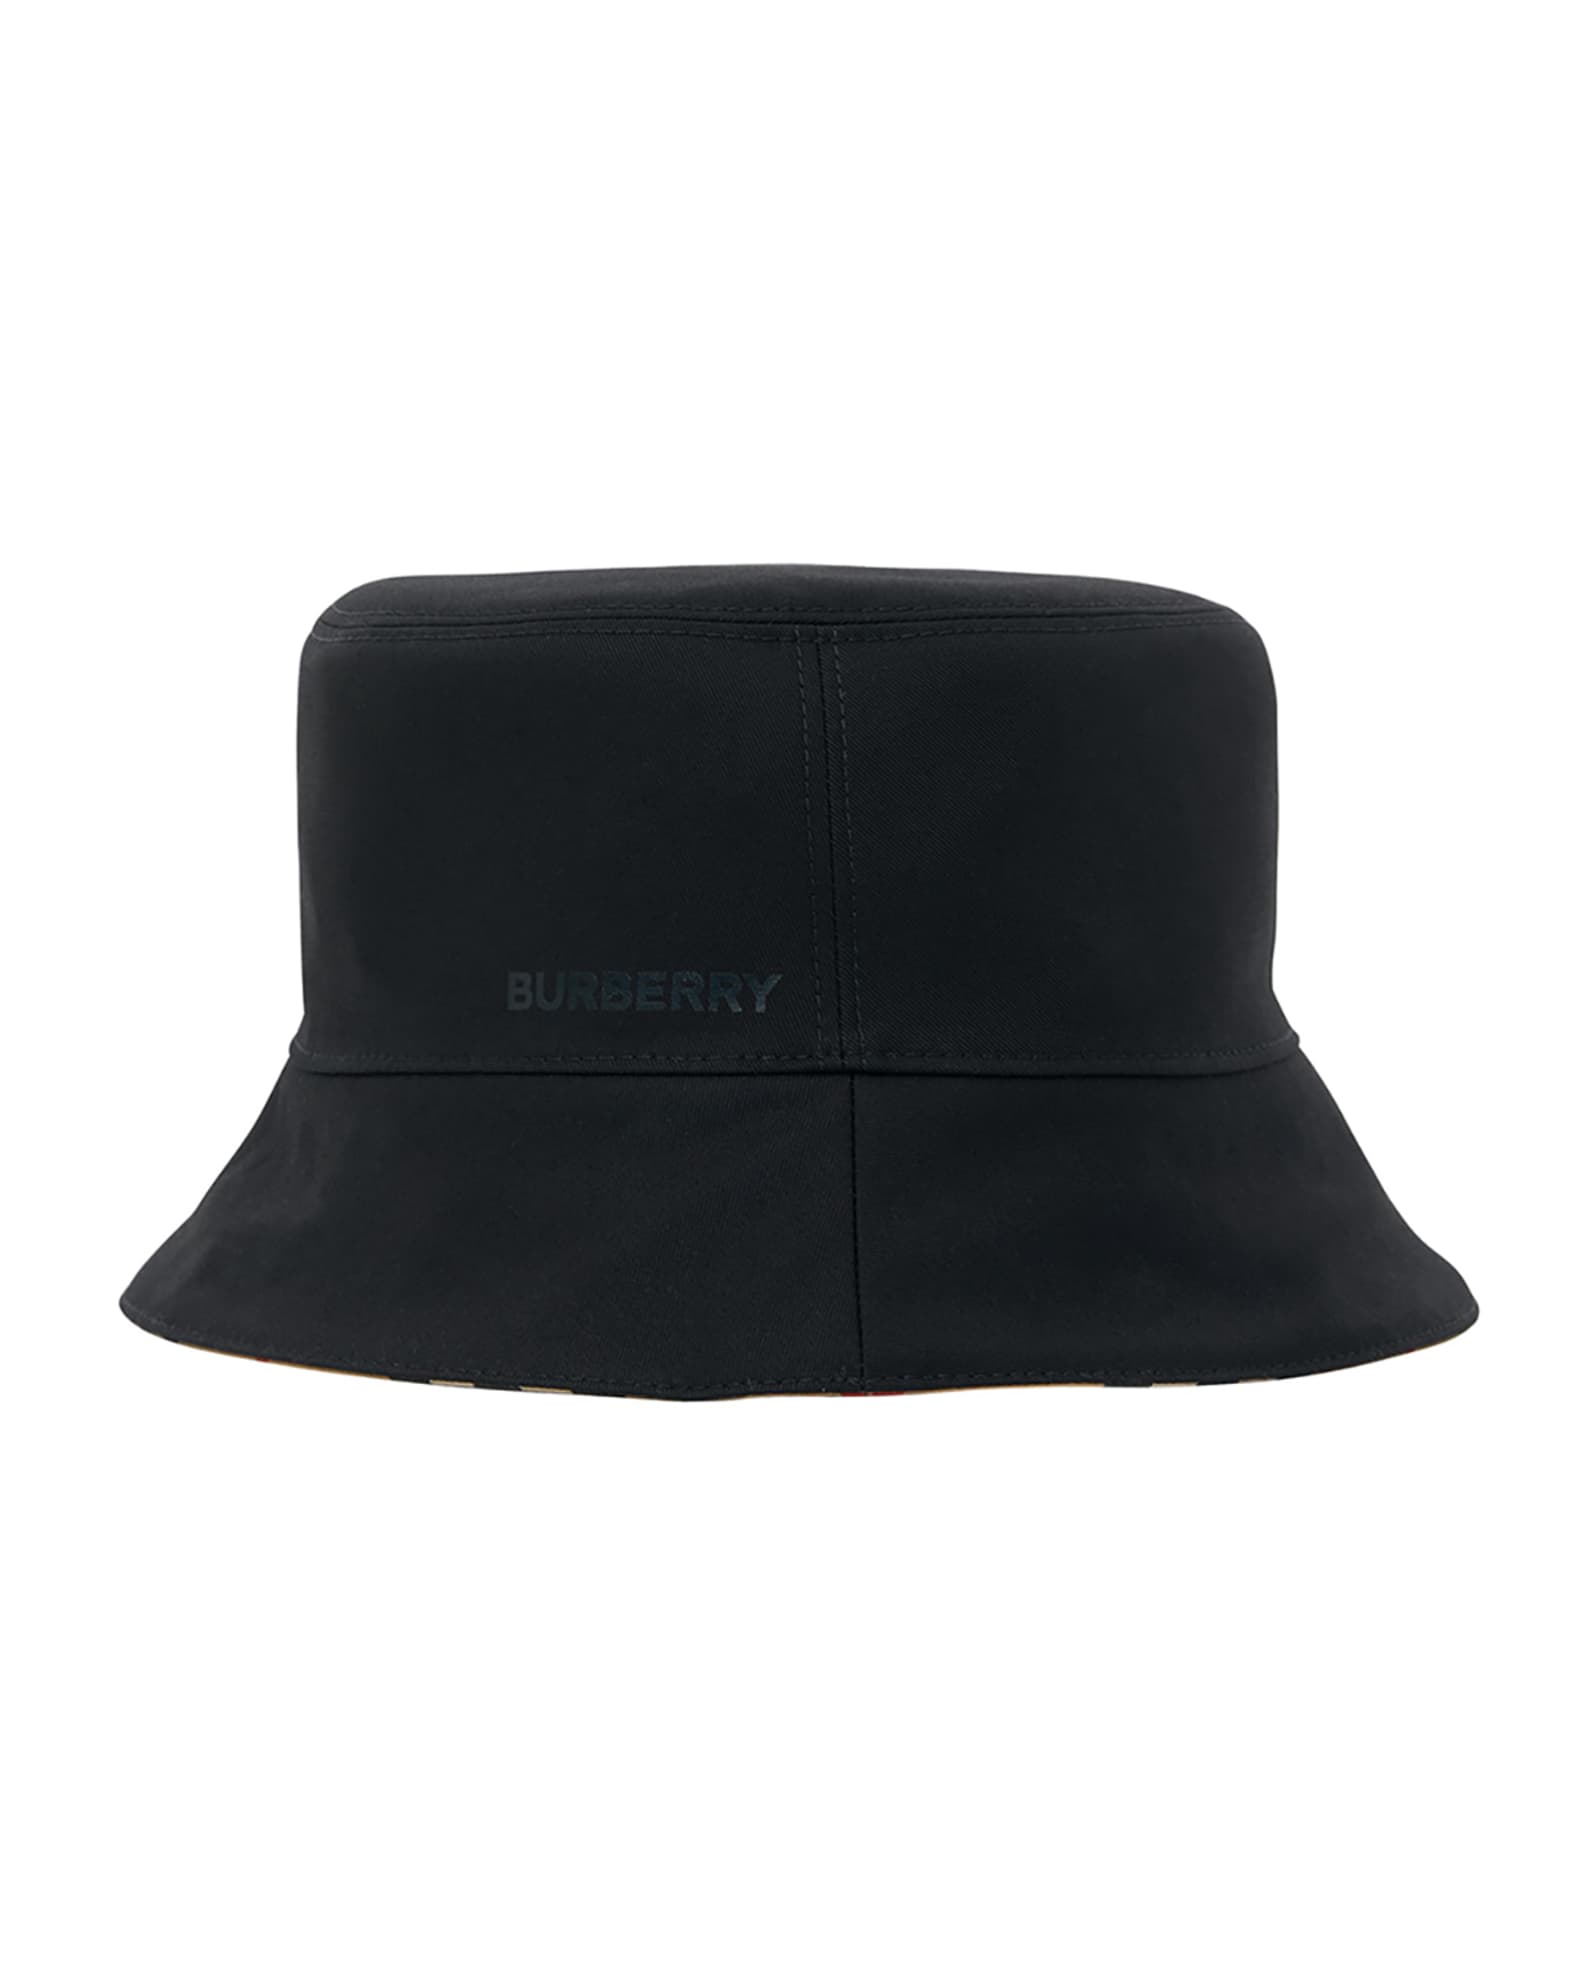 Burberry Fur Print Bucket Hat Burberry